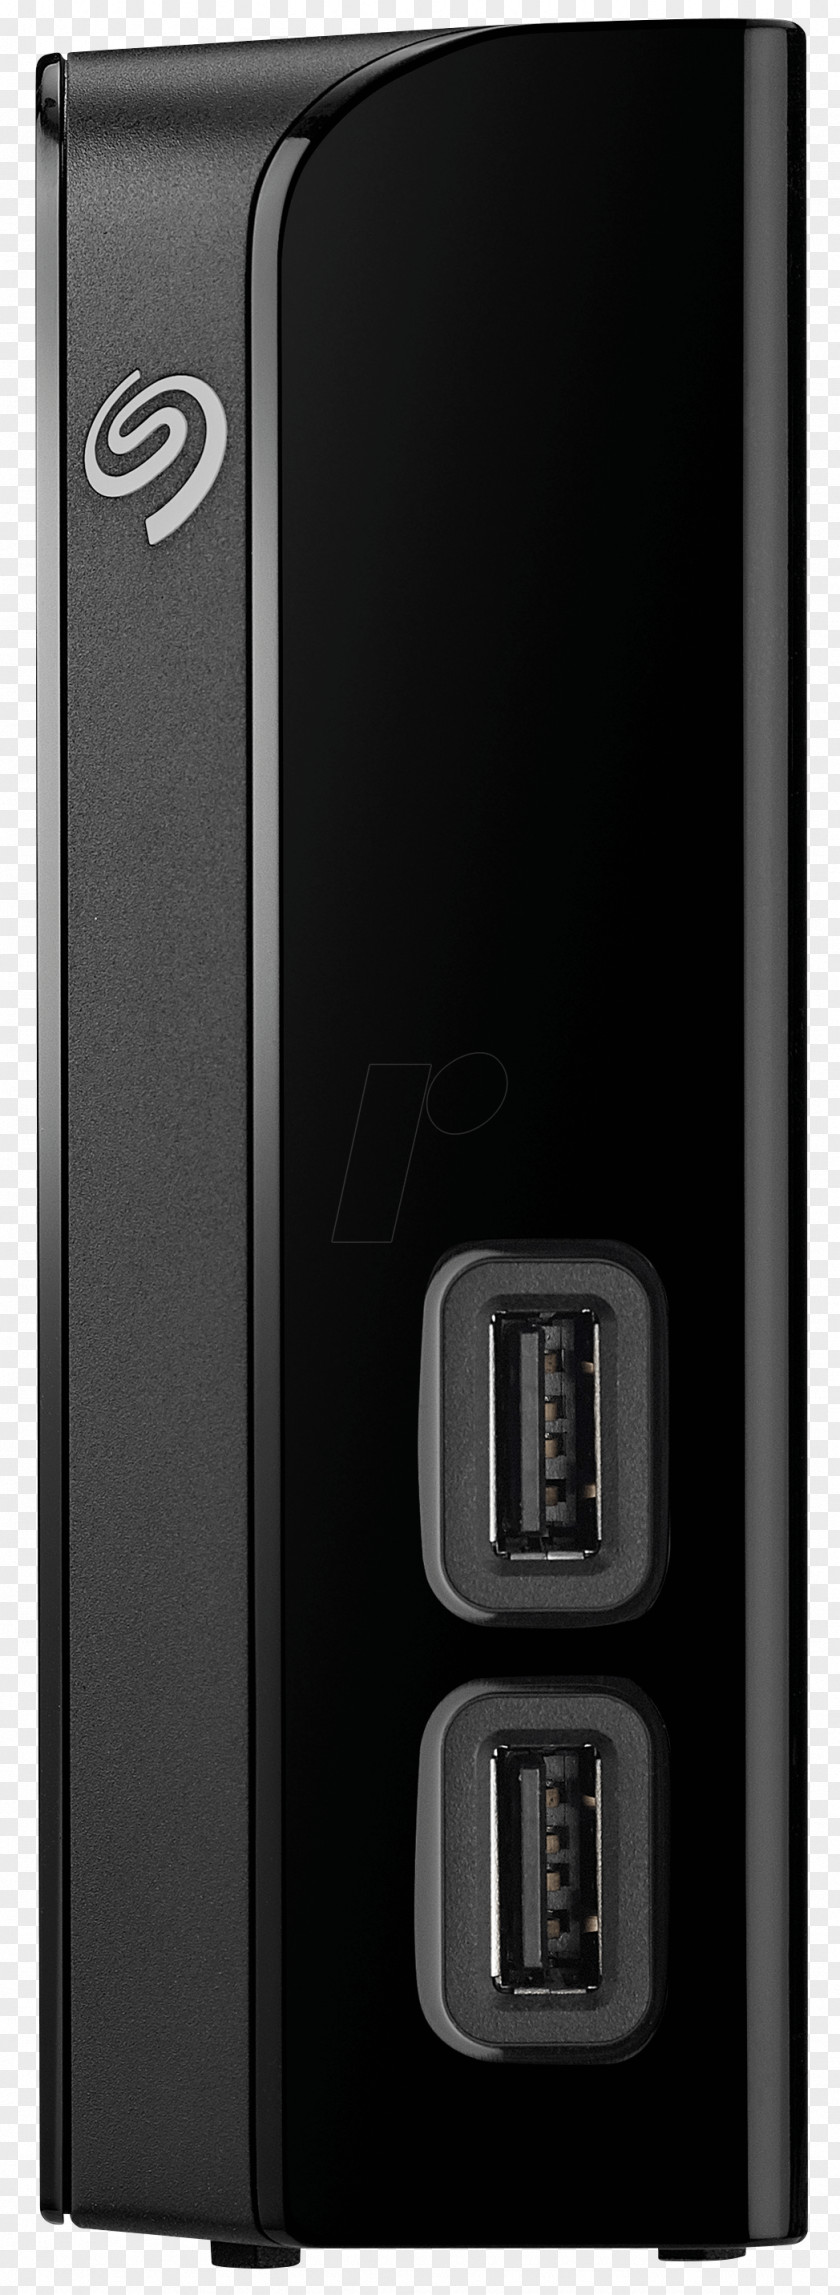 USB Hard Drives 3.0 External Storage Backup PNG